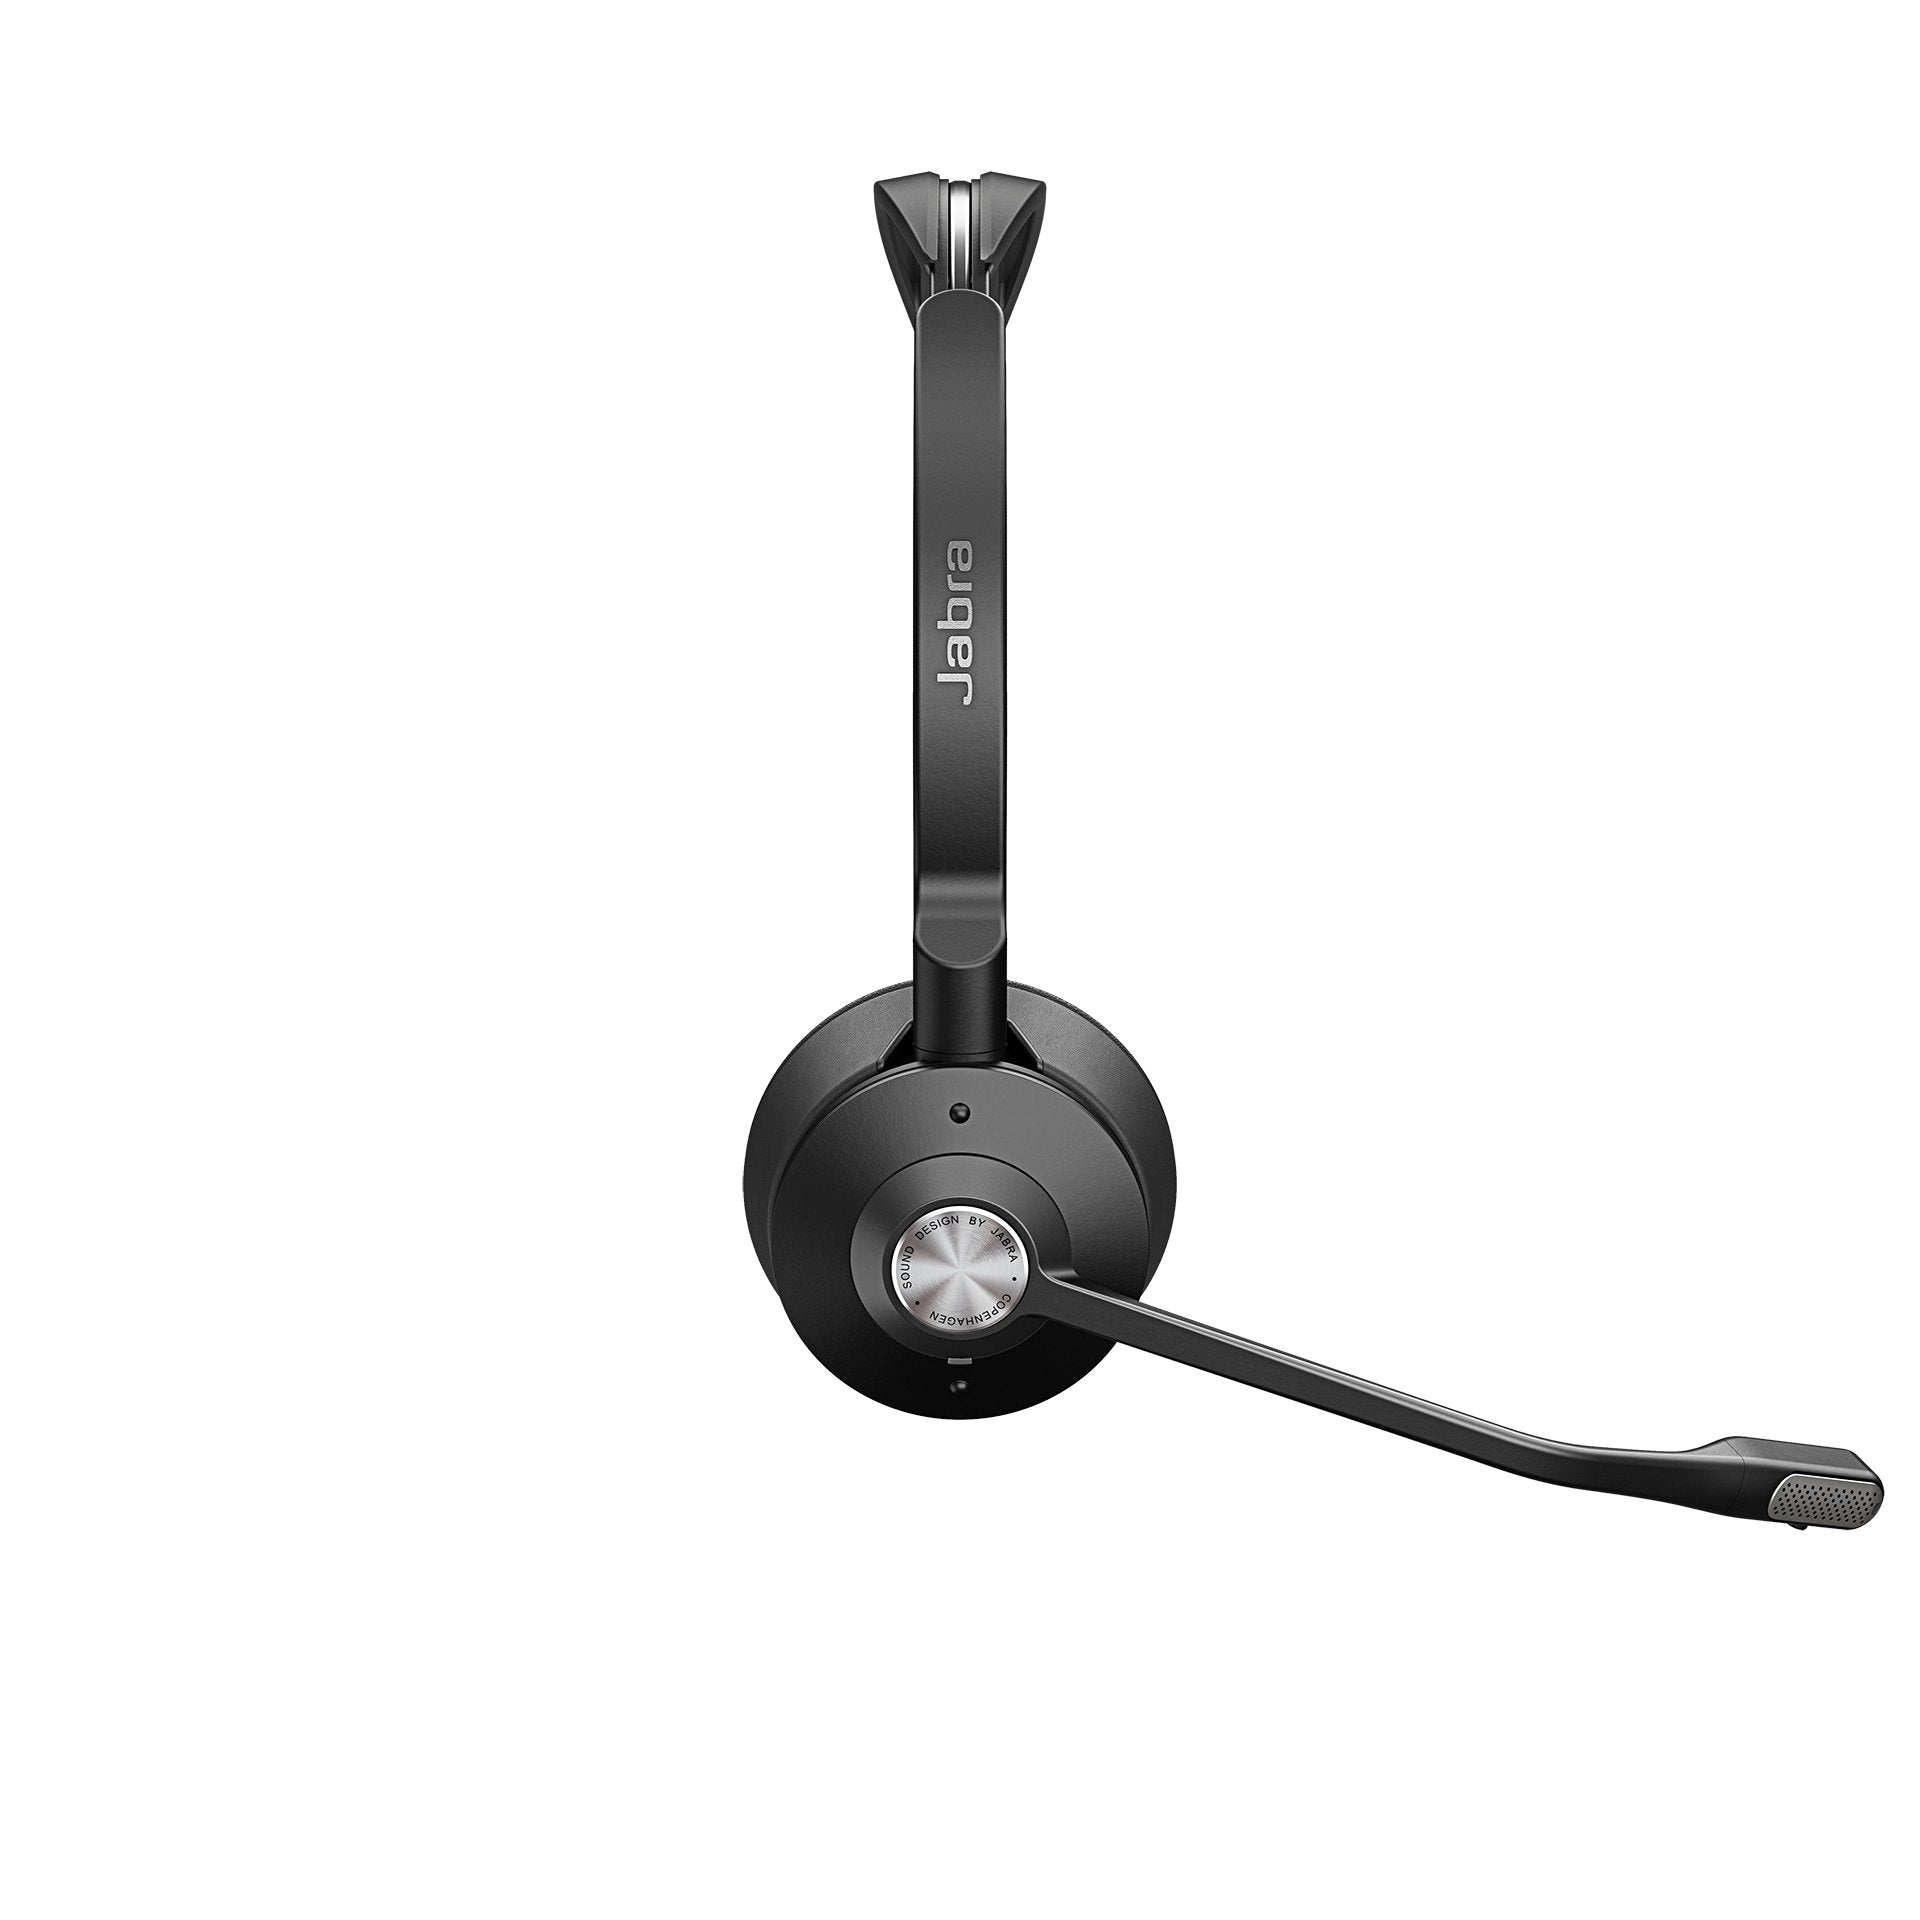 Geek Review: Jabra Evolve 75 ANC Wireless Headset